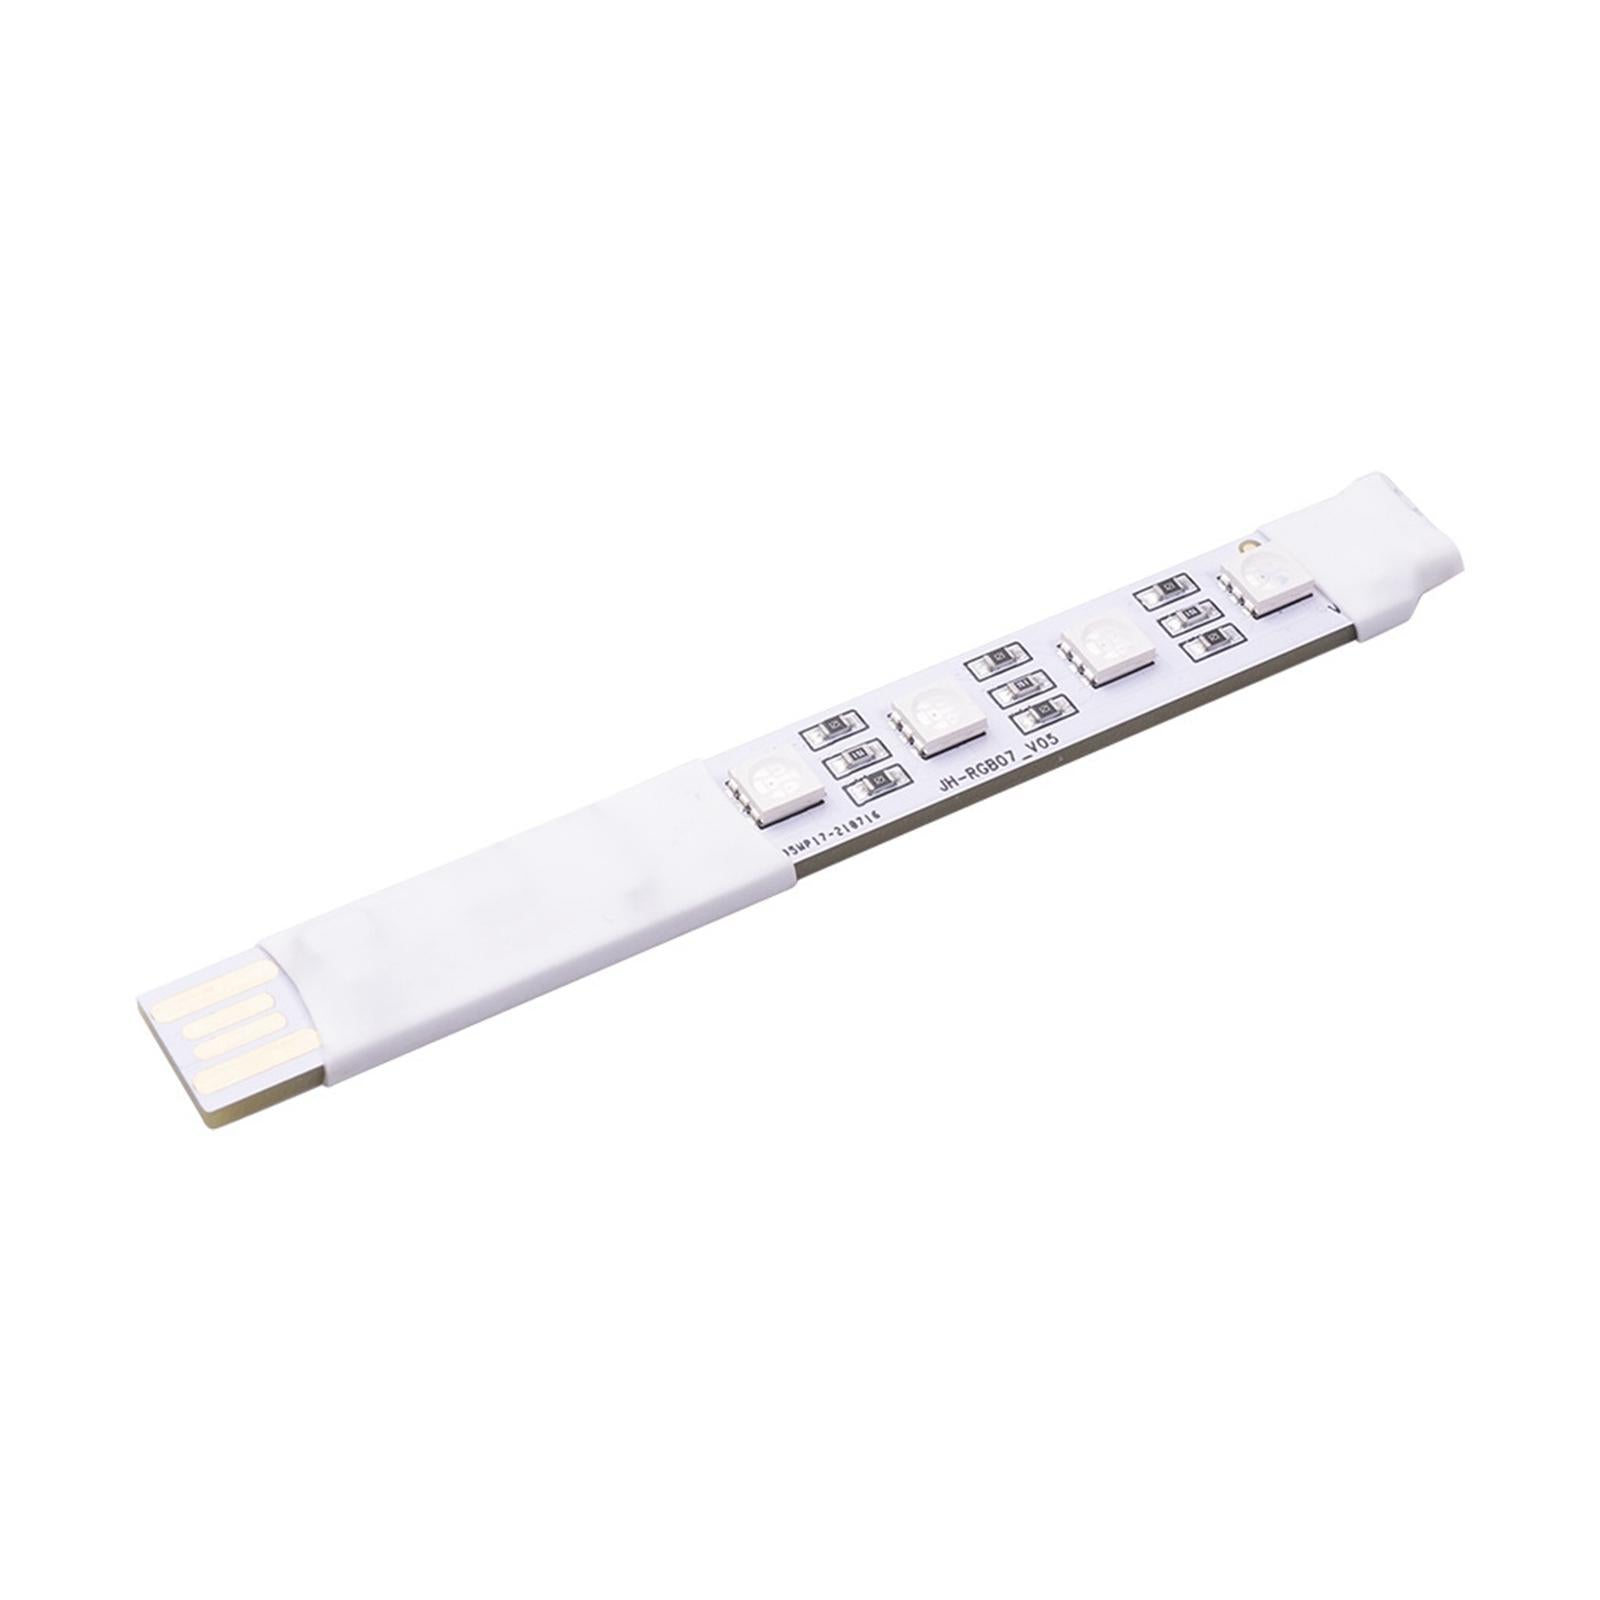 1x Smart LED Light Board Lighting Decor Remote Control Bluetooth for Home Black